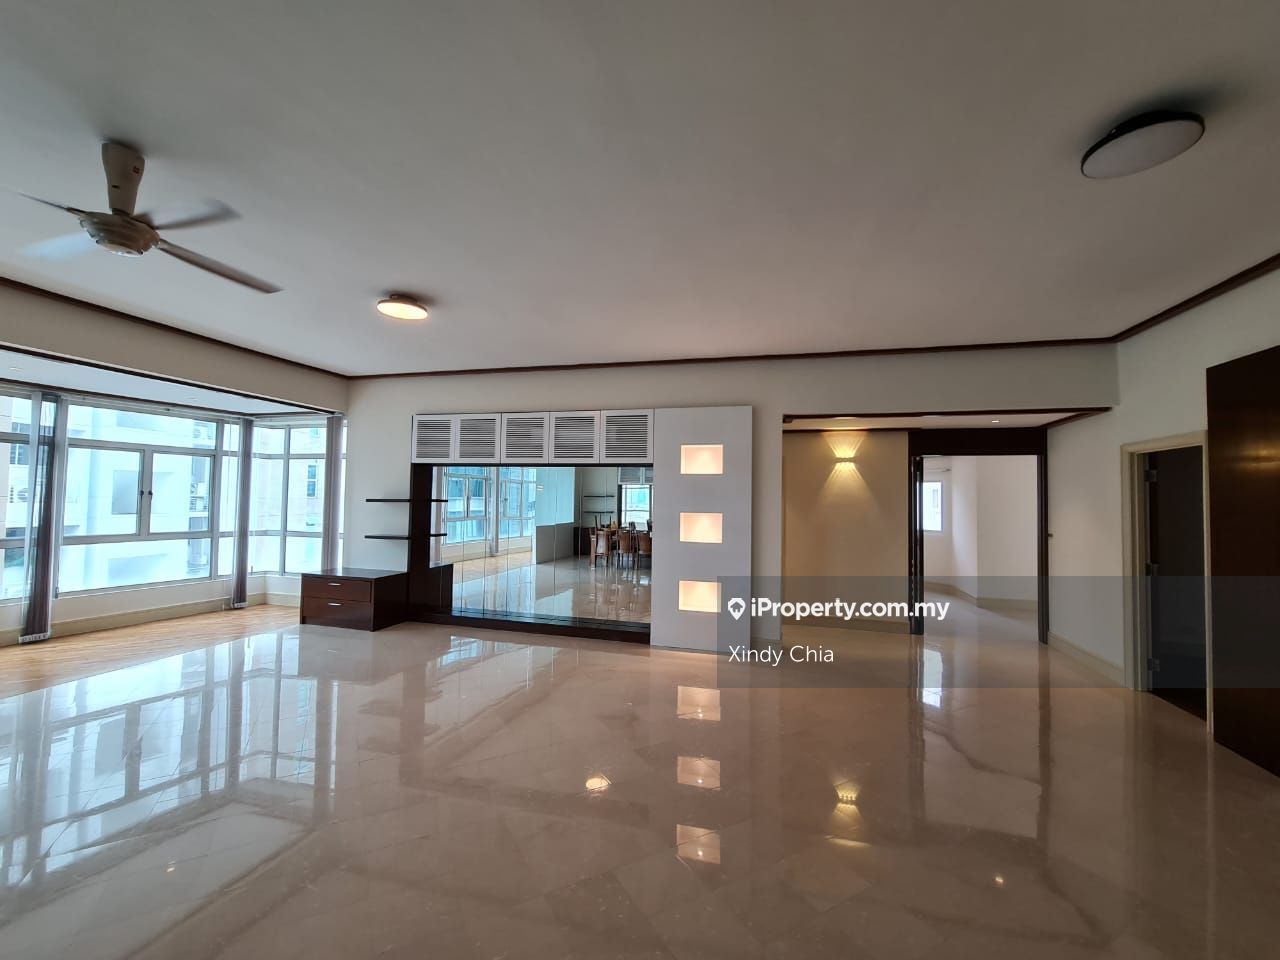 Suasana Sentral Condominiums, KL Sentral for rent - RM8500 | iProperty ...